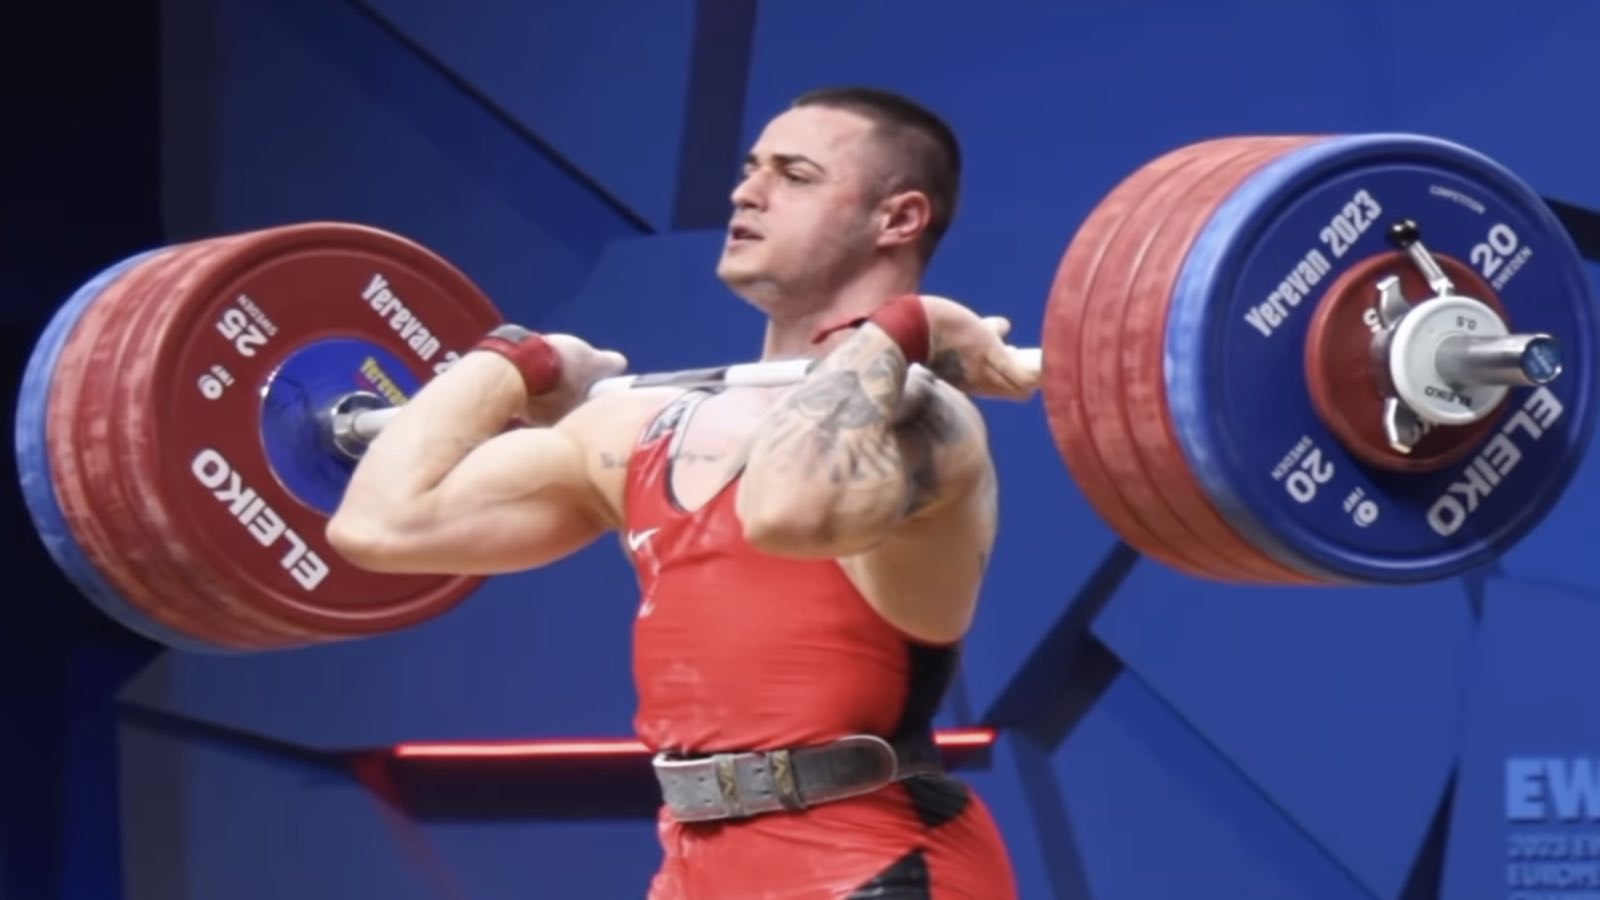 weightlifter-karlos-nasar-(89kg)-breaks-5-world-records-at-2023-european-championships-–-breaking-muscle